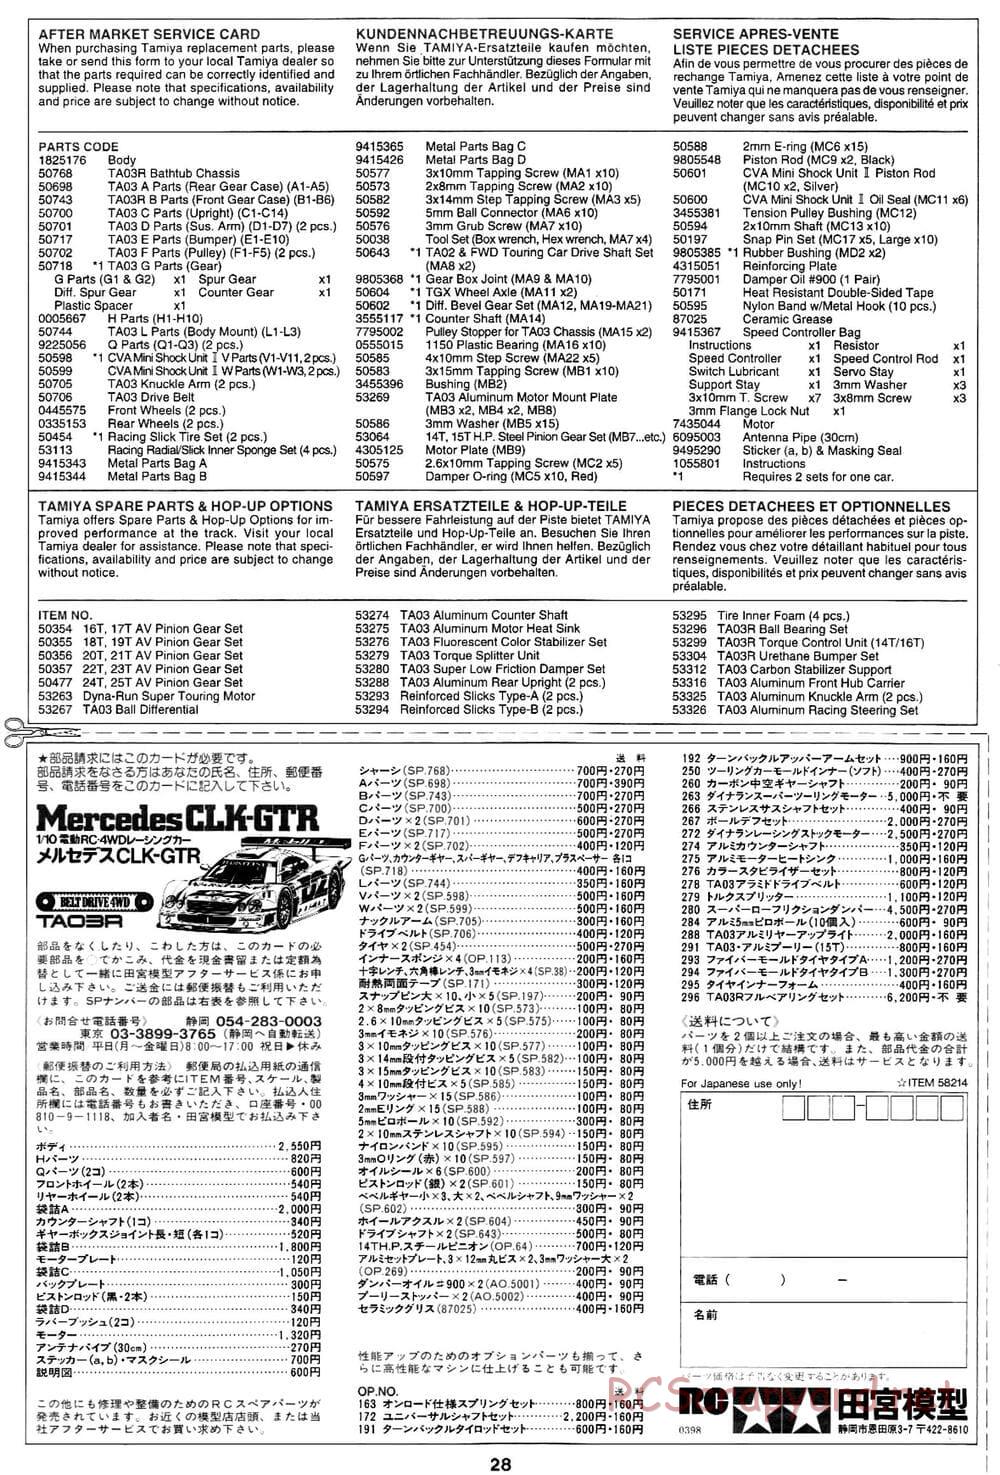 Tamiya - Mercedes CLK-GTR - TA-03R Chassis - Manual - Page 28